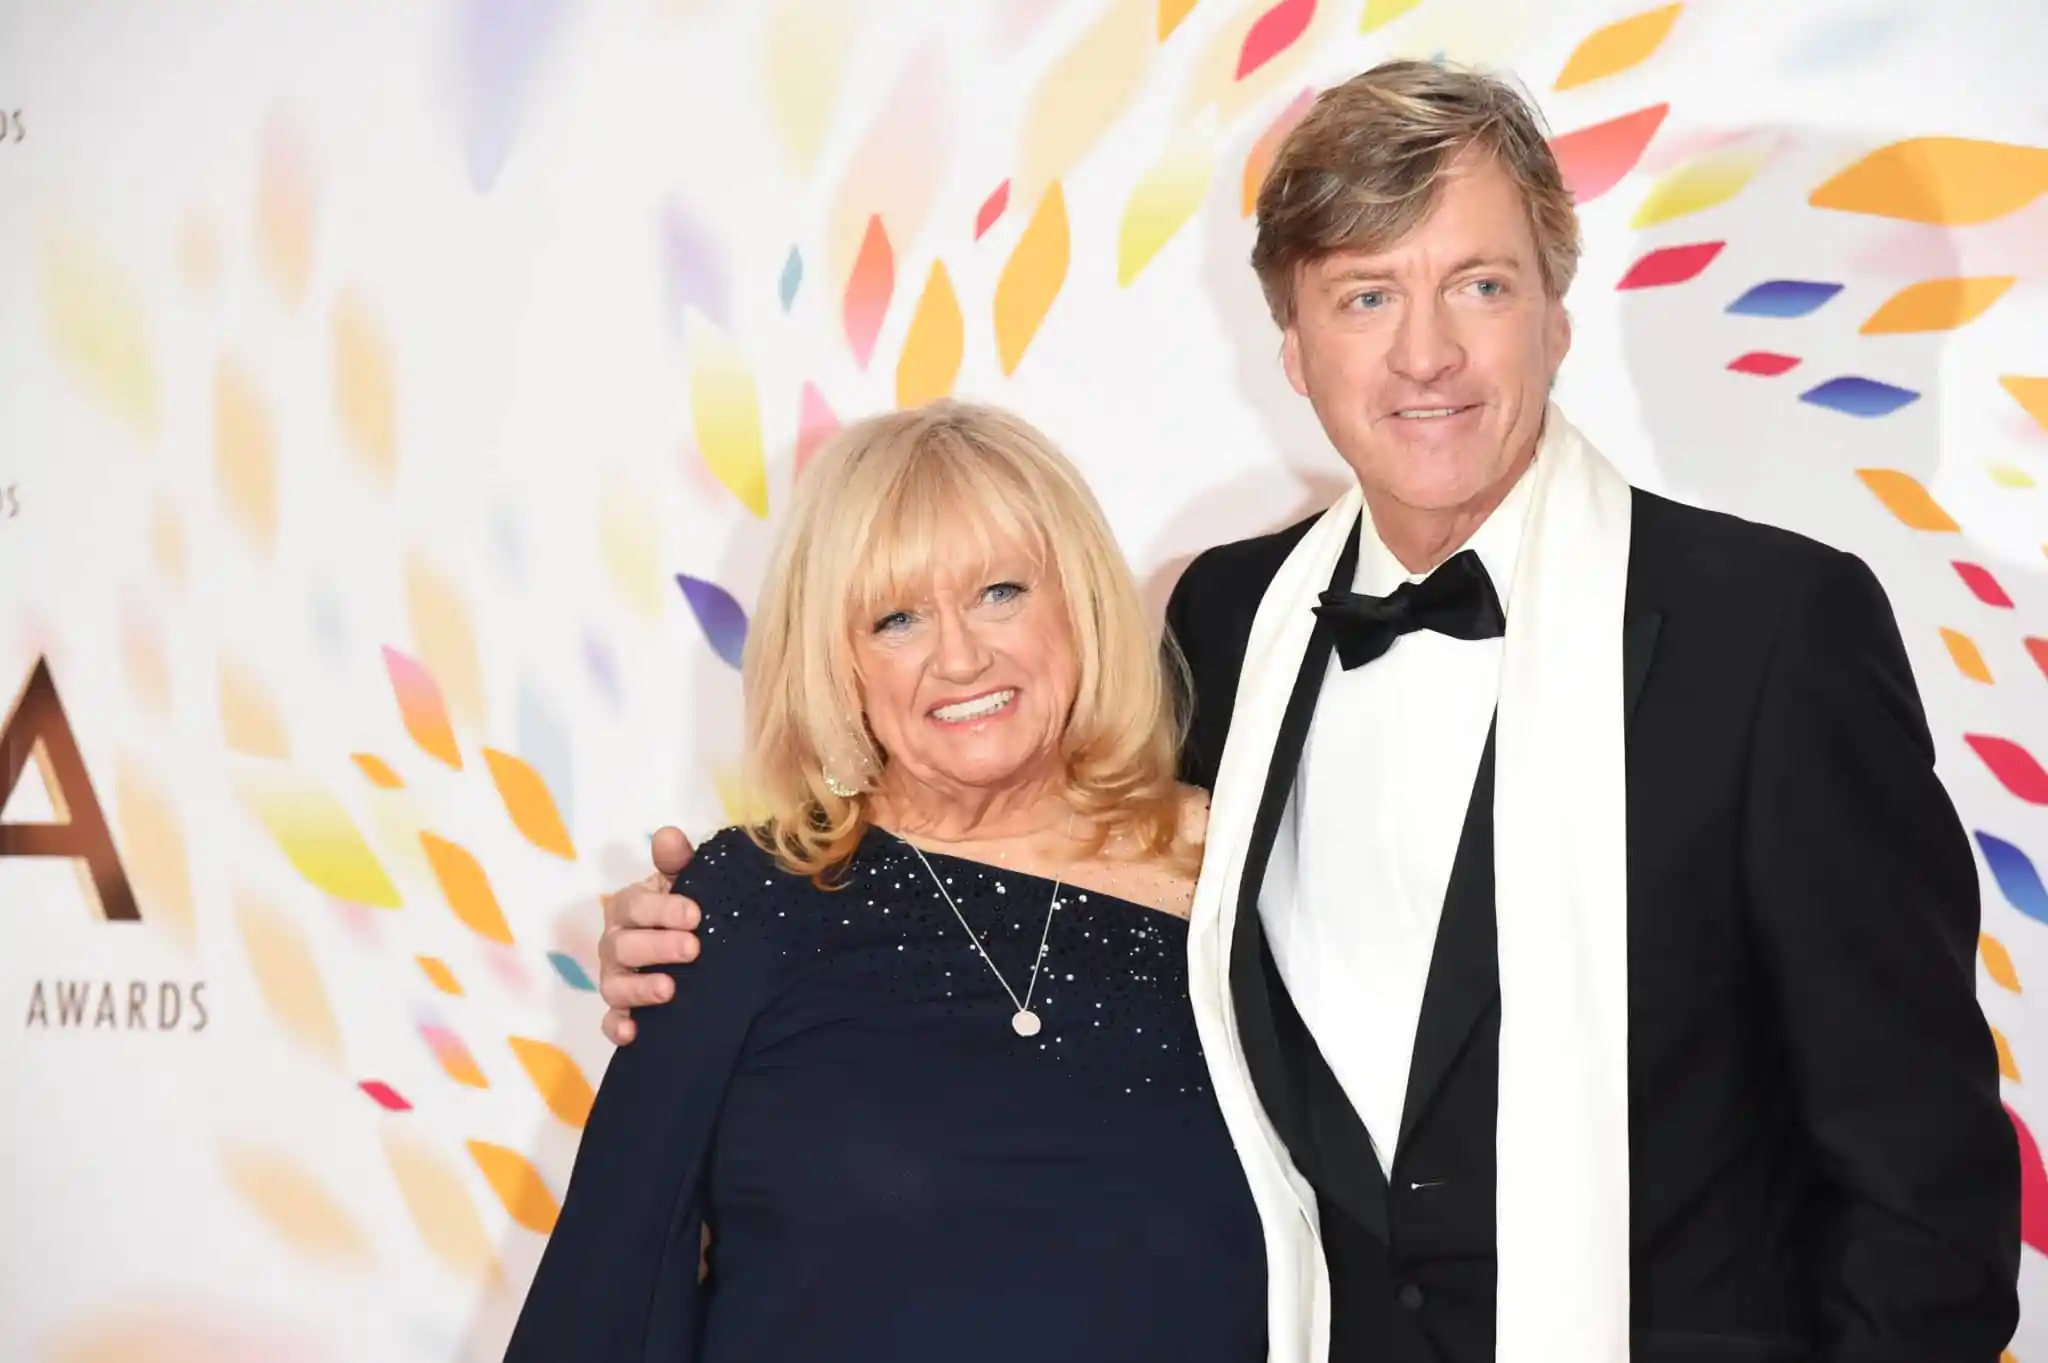 Judy Finnigan and Richard Madeley at the National Television Awards 2020 